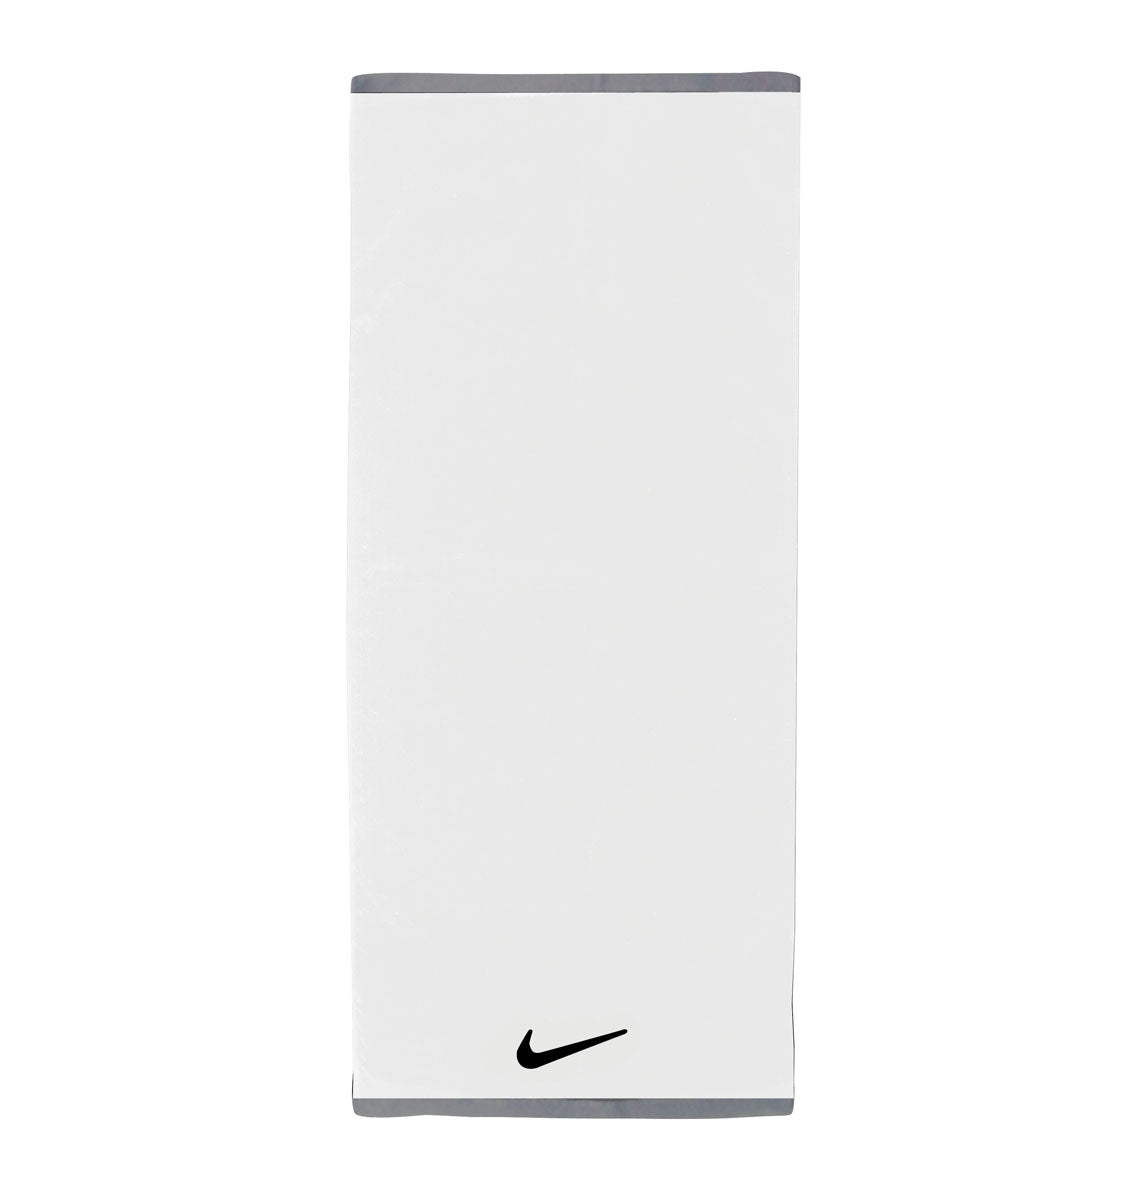 Nike Fundamental Towel - Large - White/Black - 1